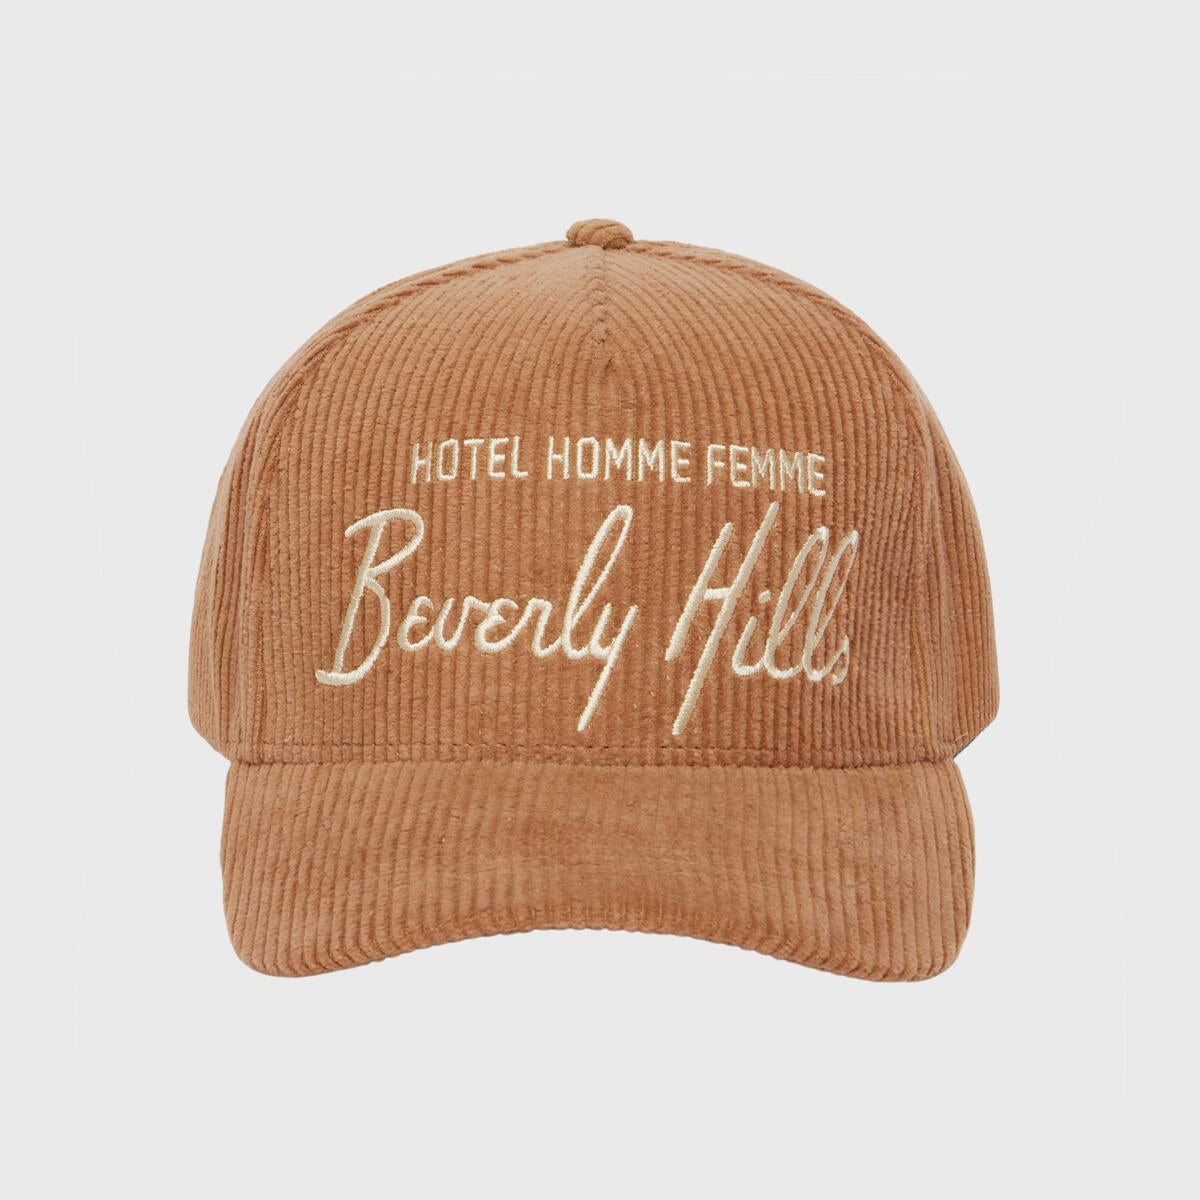 Homme Femme "Hotel" Brown Corduroy Hat (HFSS2022129-4)